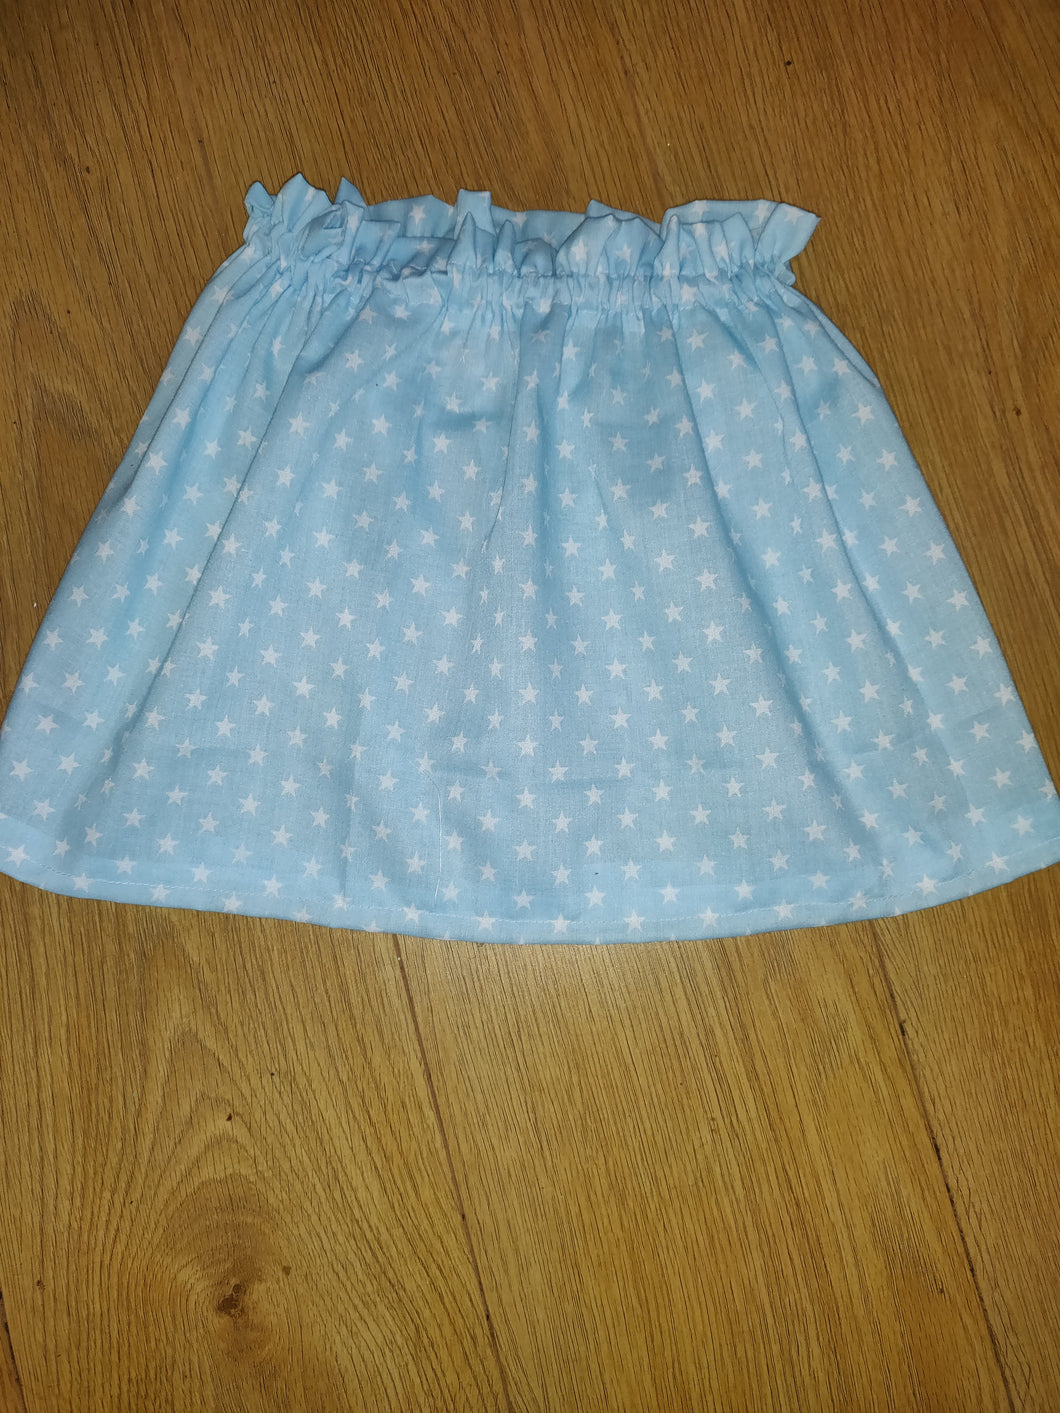 Blue star skirt age 3-4